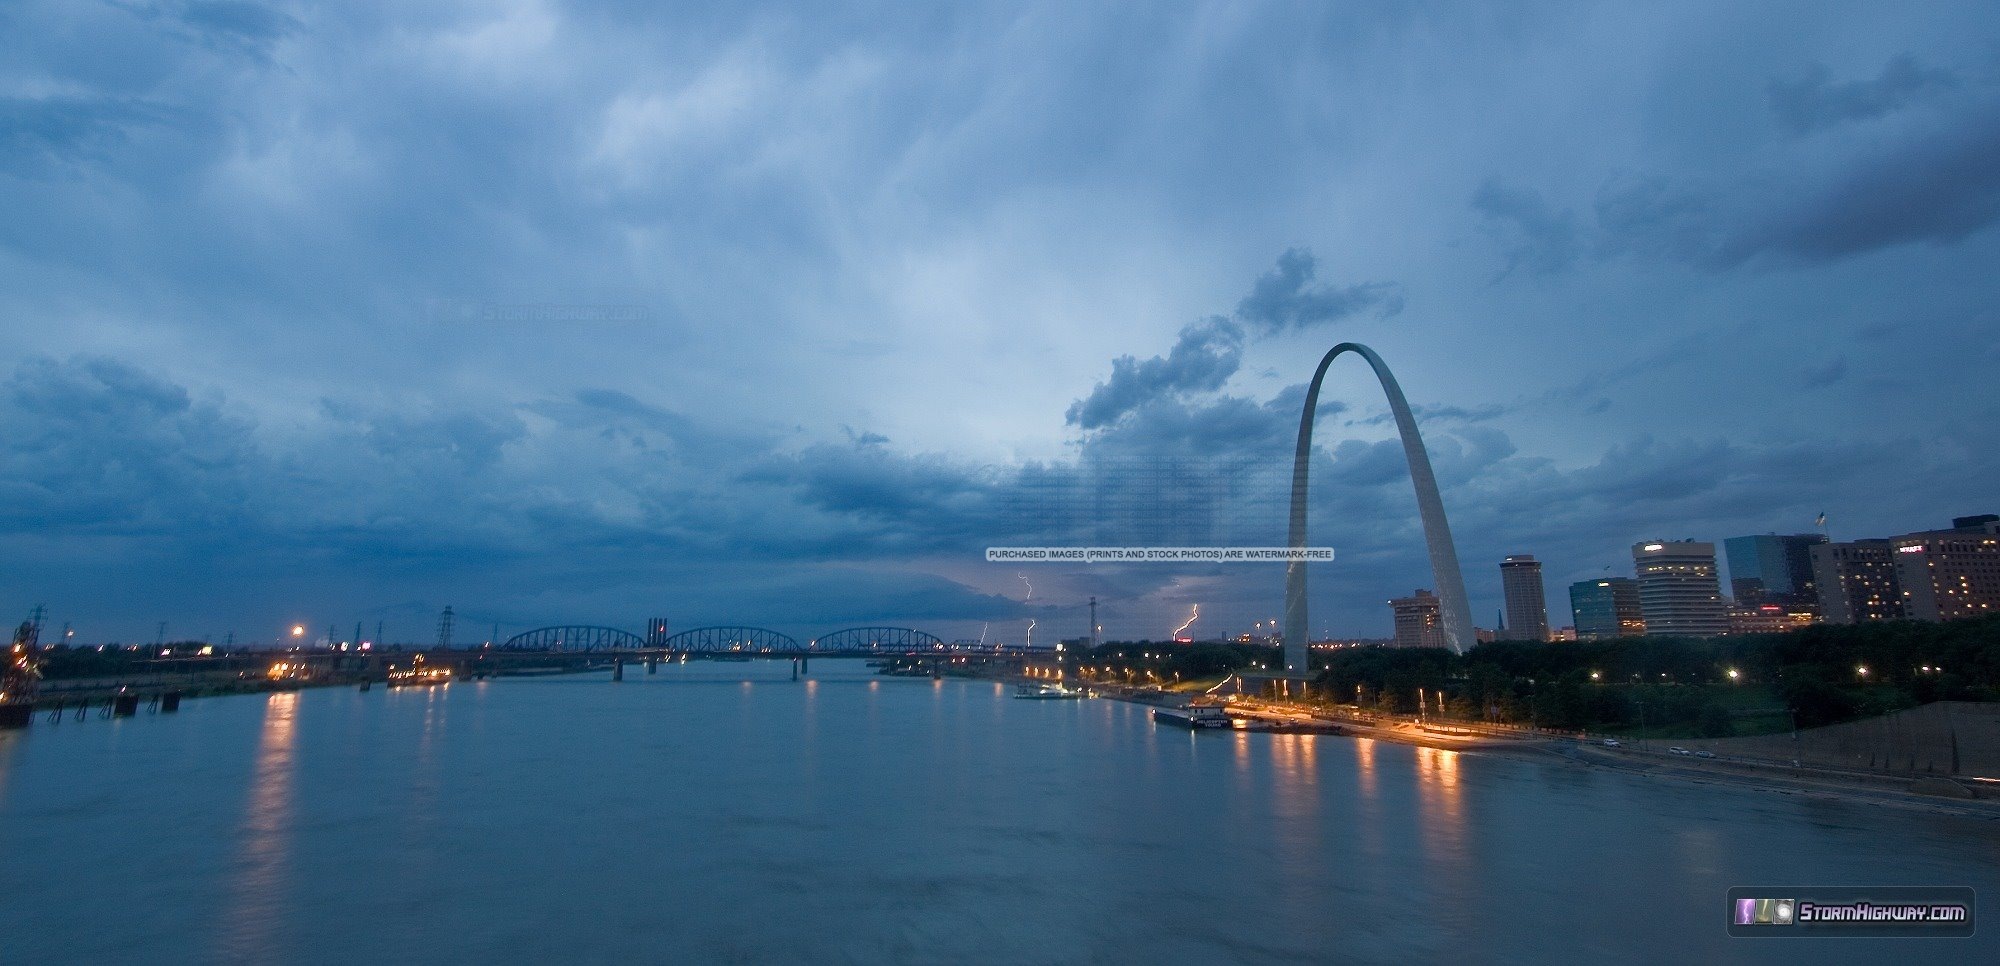 Storm over St. Louis - June 21, 2014